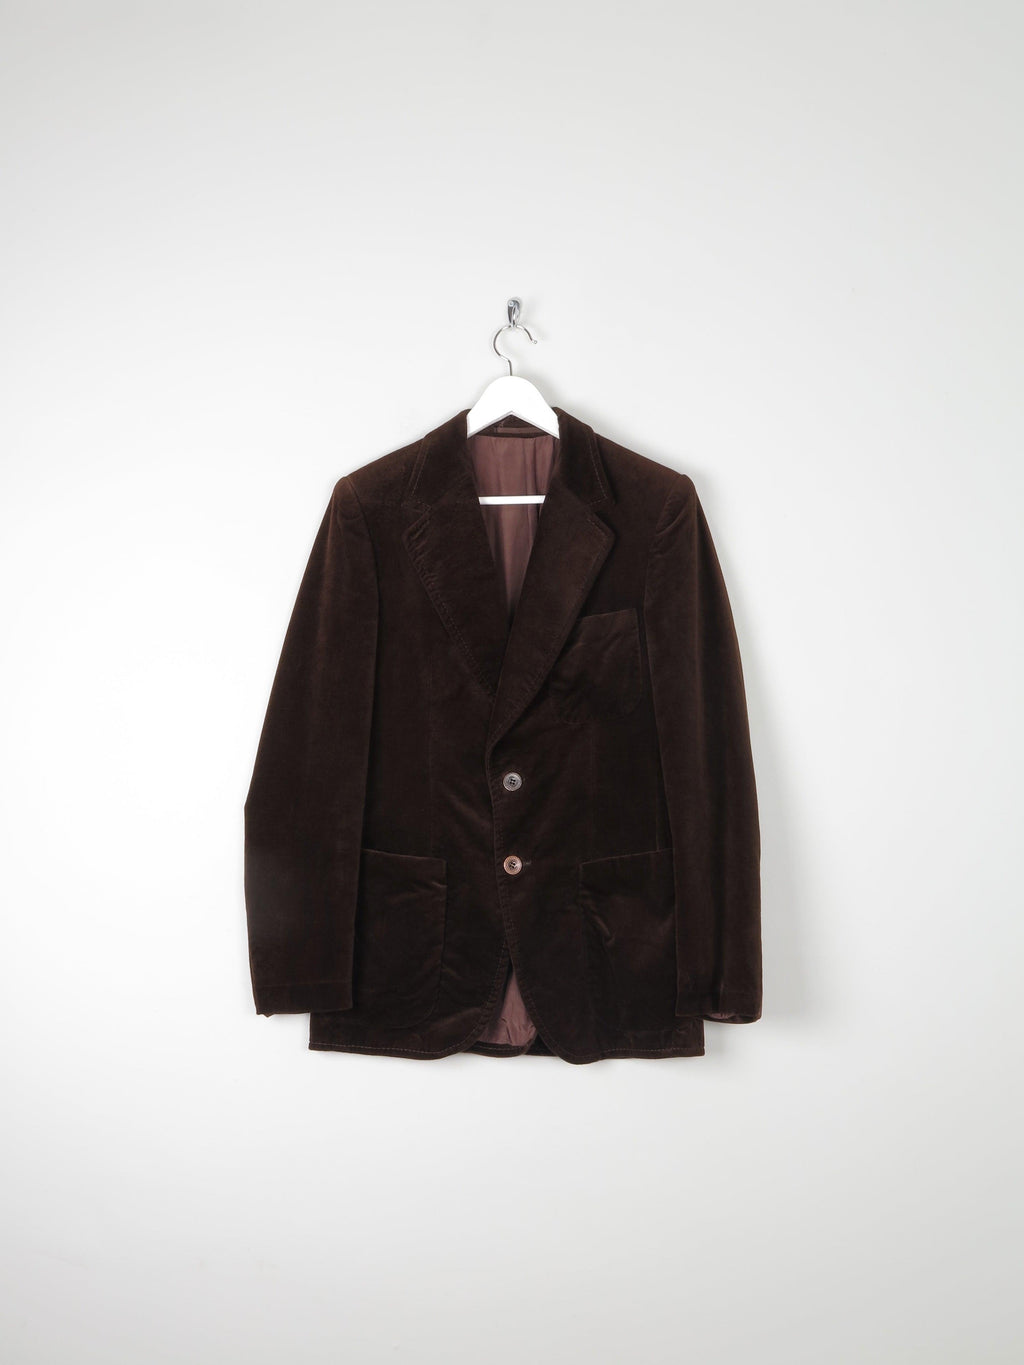 Men’s Brown Velvet Jacket With Patch Pockets 38" S - The Harlequin